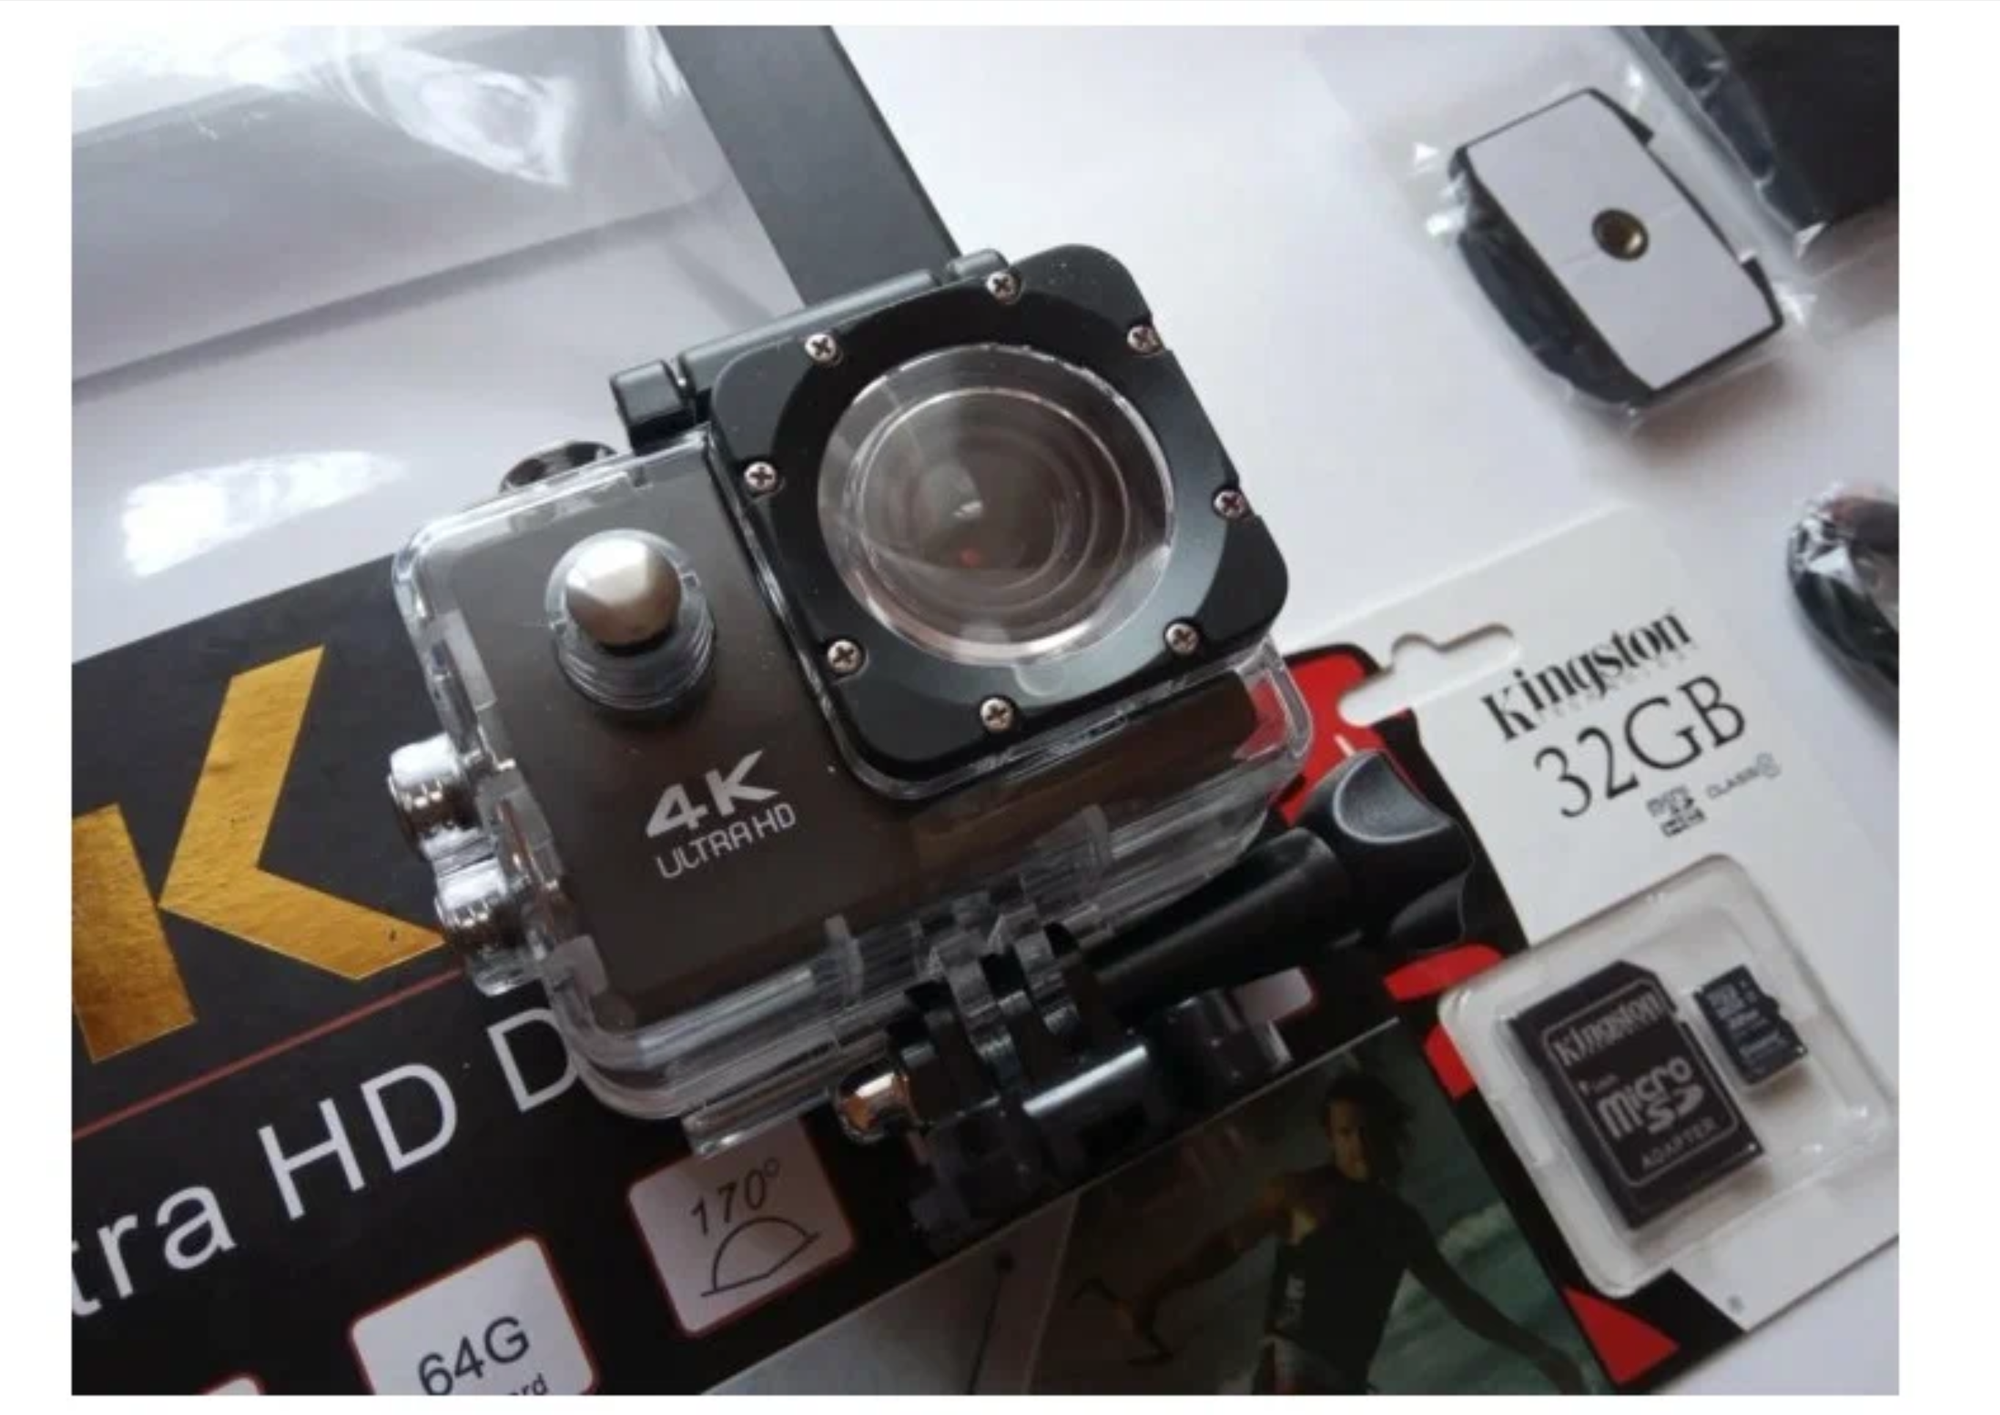 Экшн Камера 4K Sports Ultra HD DV c Wi-Fi